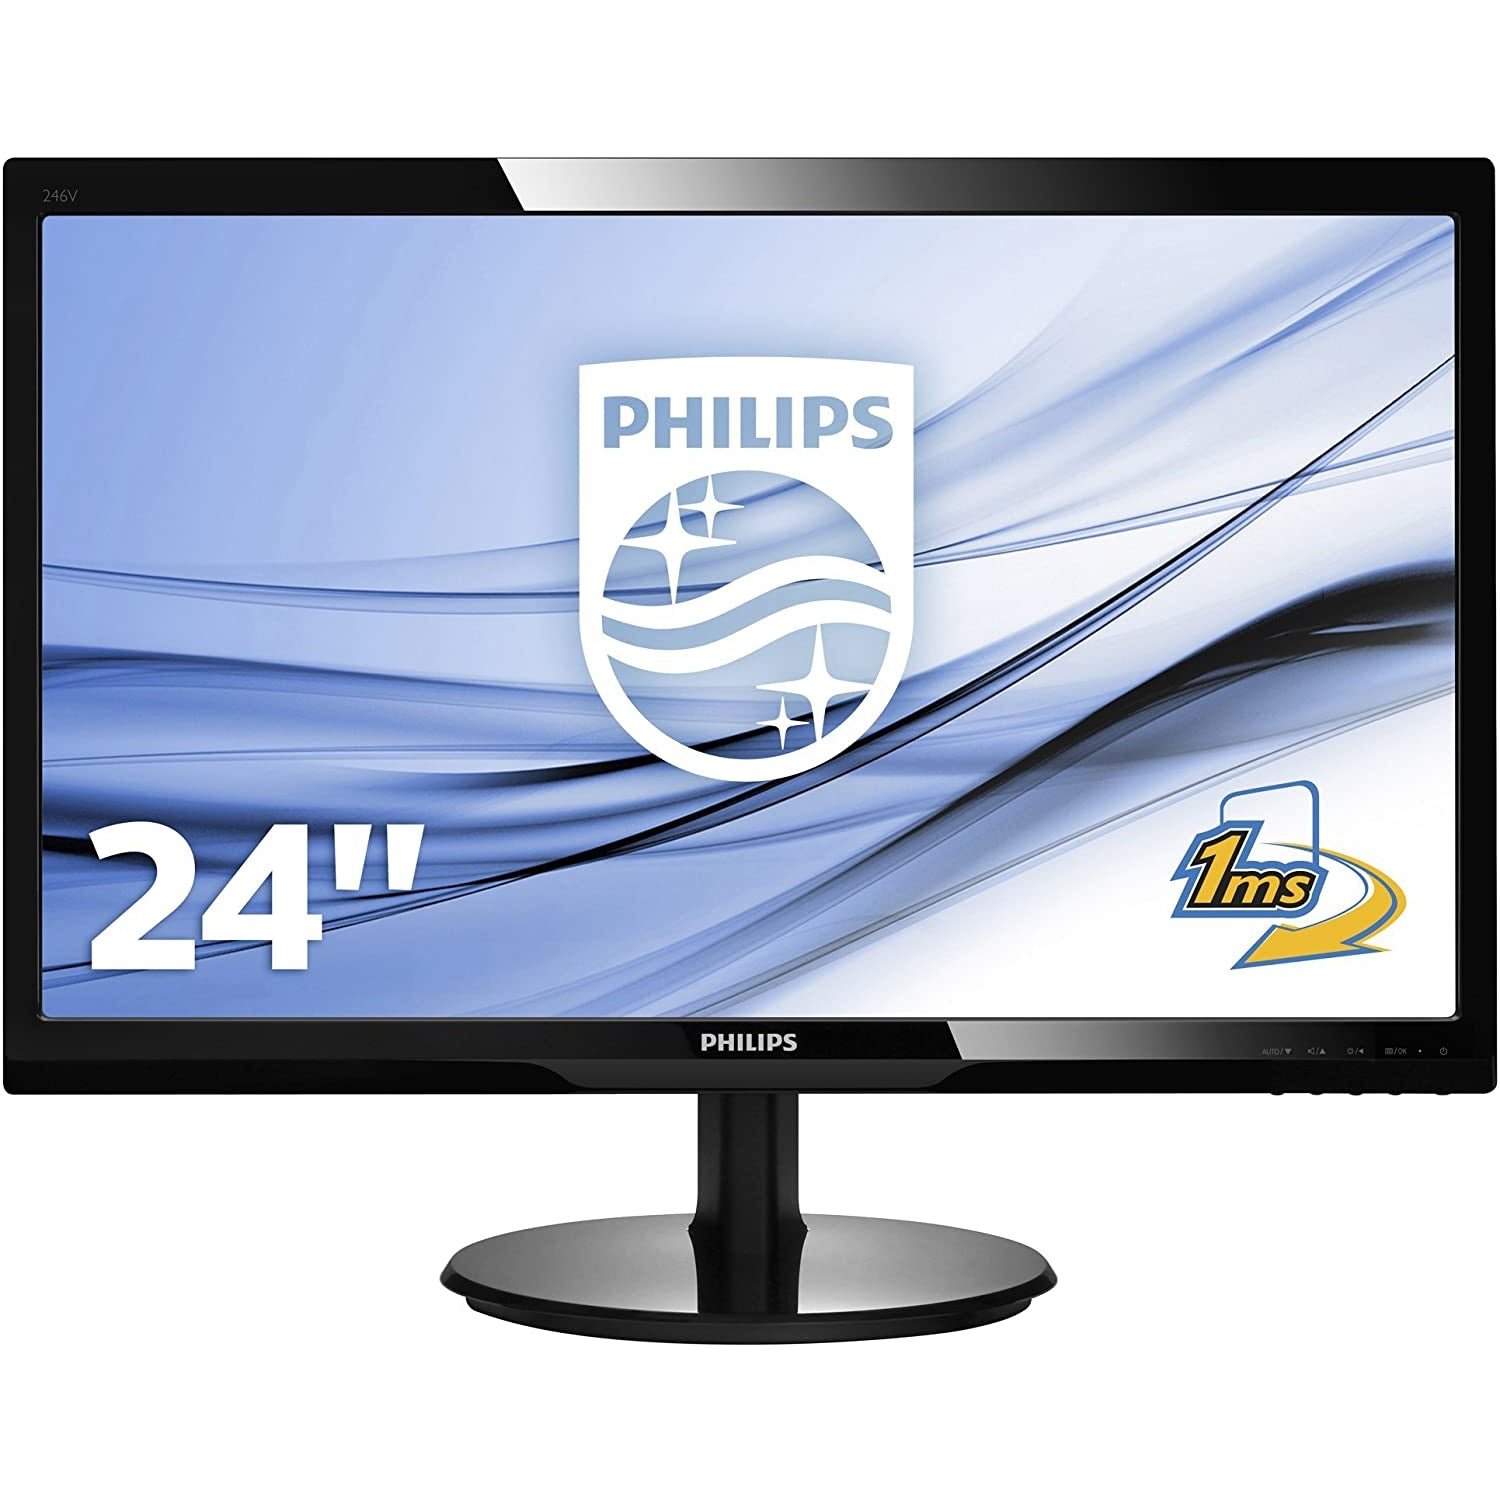 Philips 246V5LHAB 24-Inch LED Monitor (1920 x 1080 @ 60 Hz